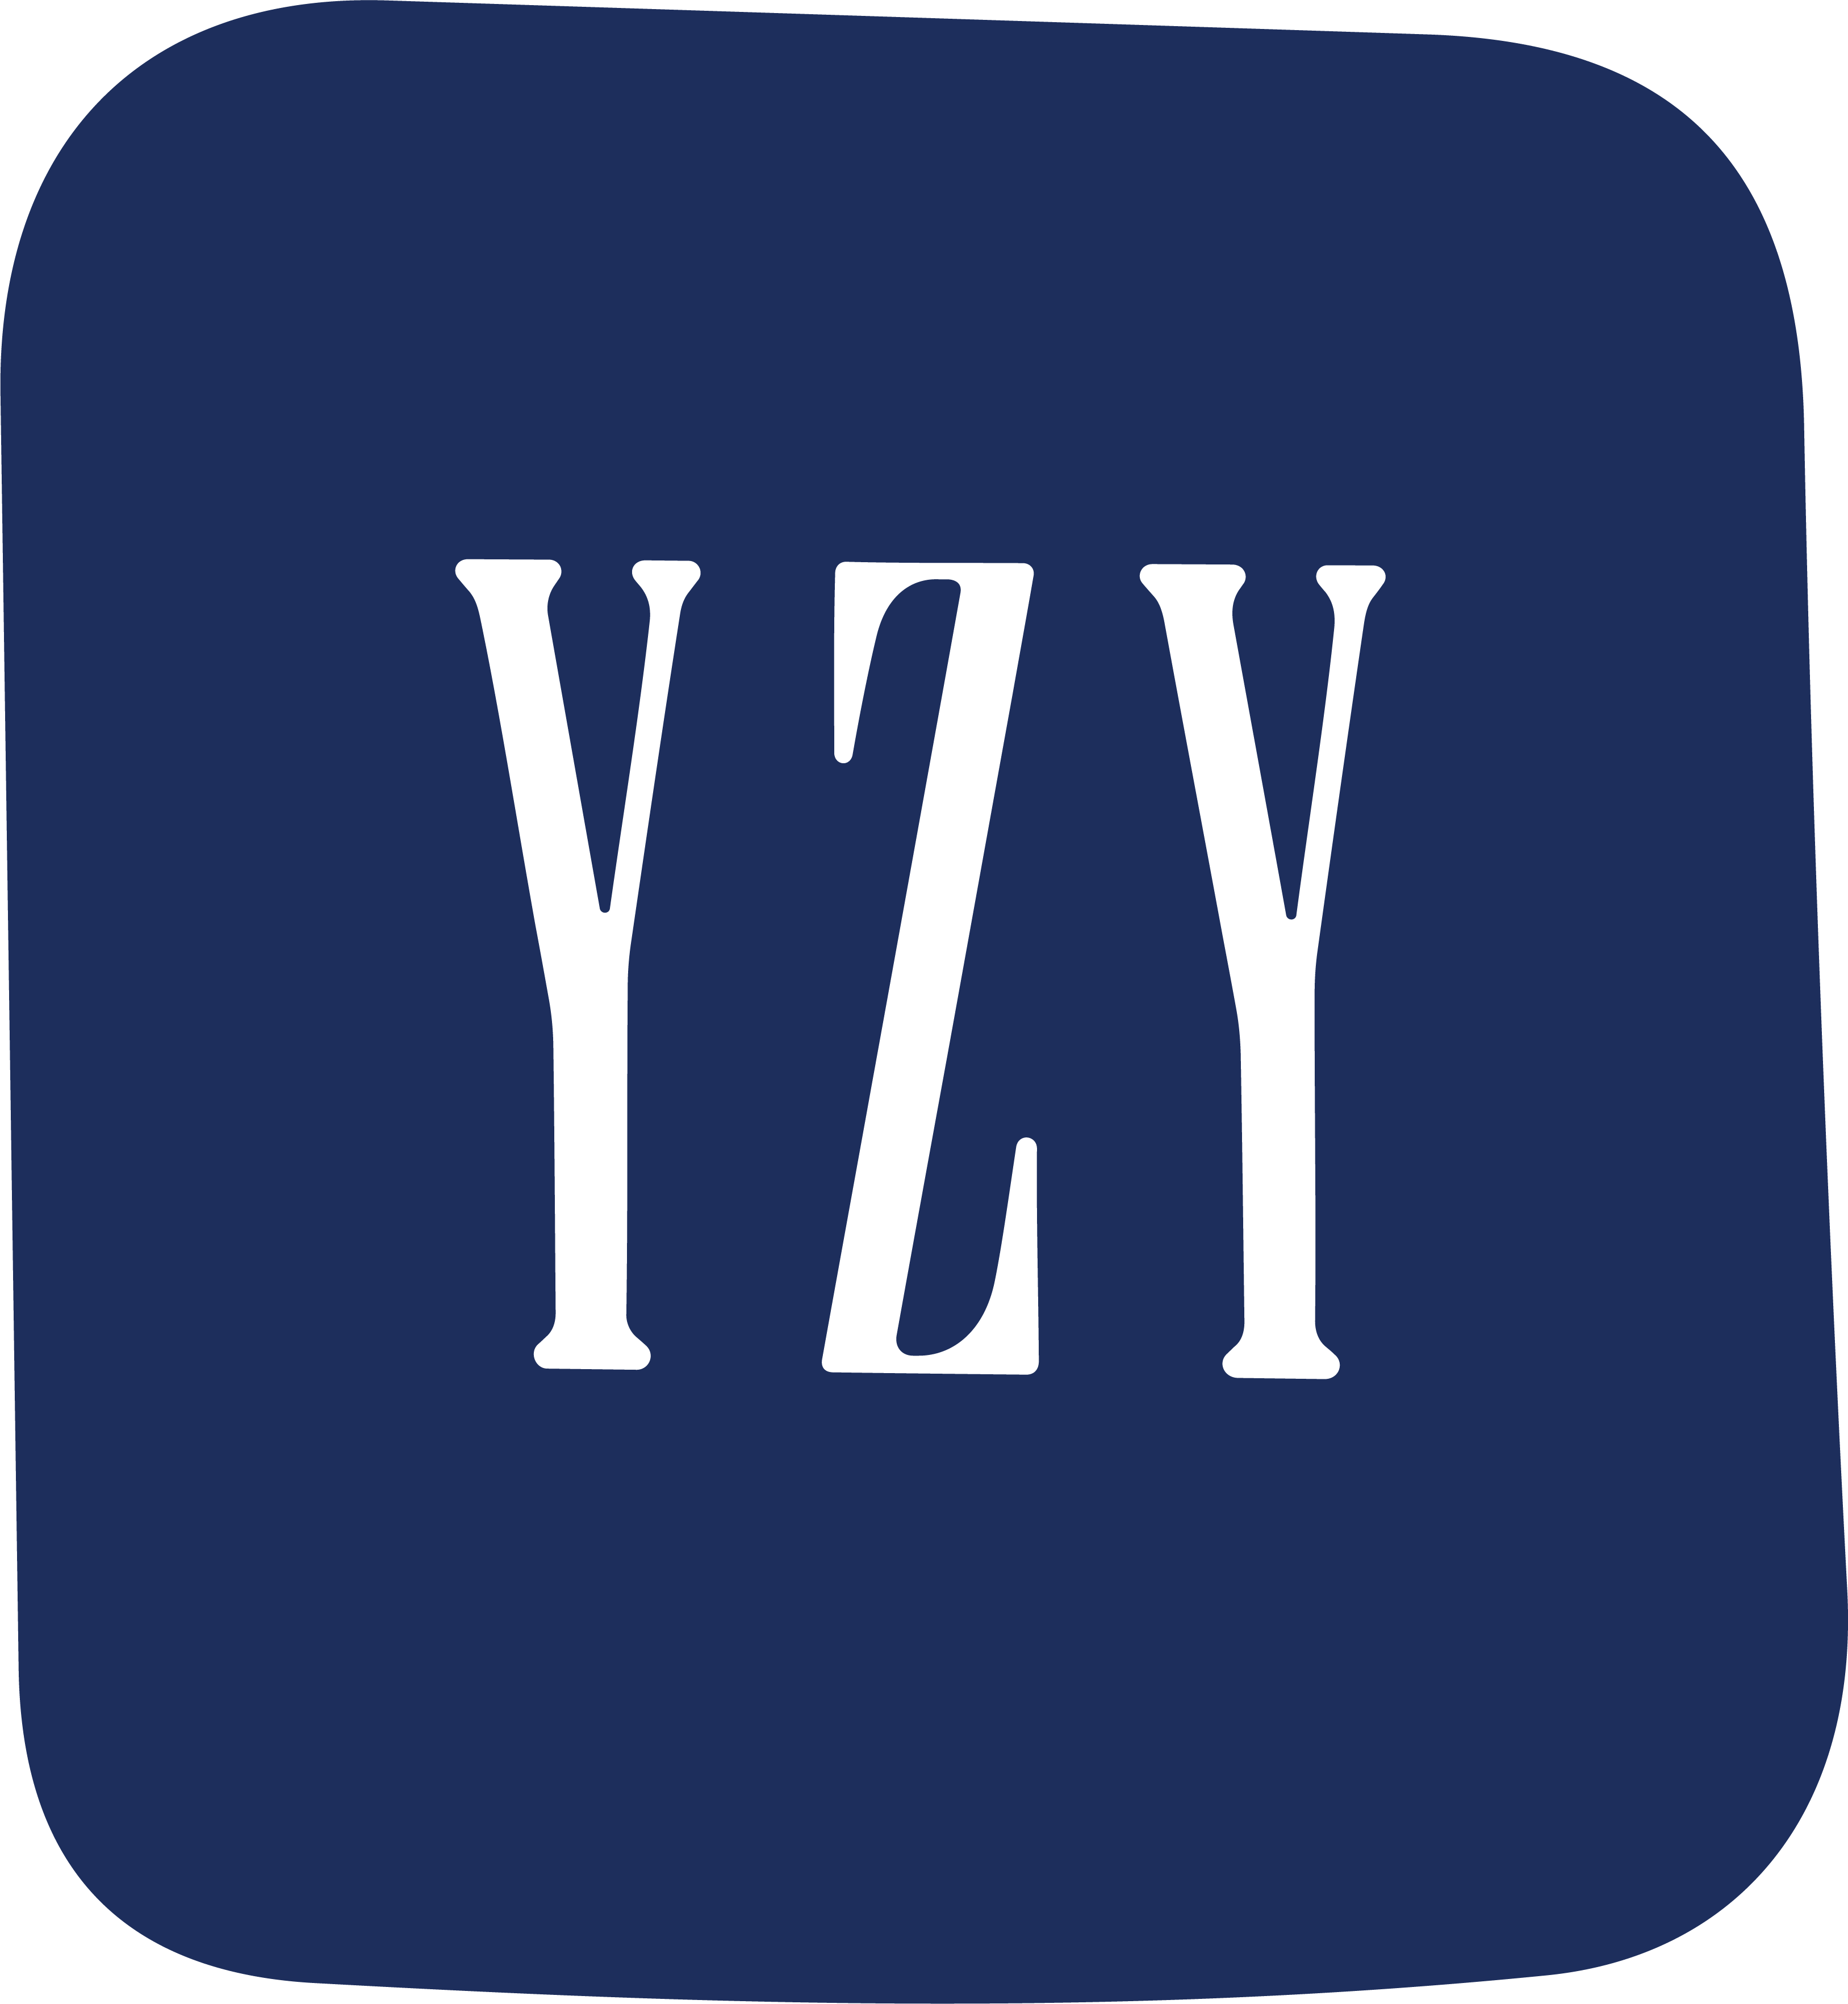 yeezy-logo